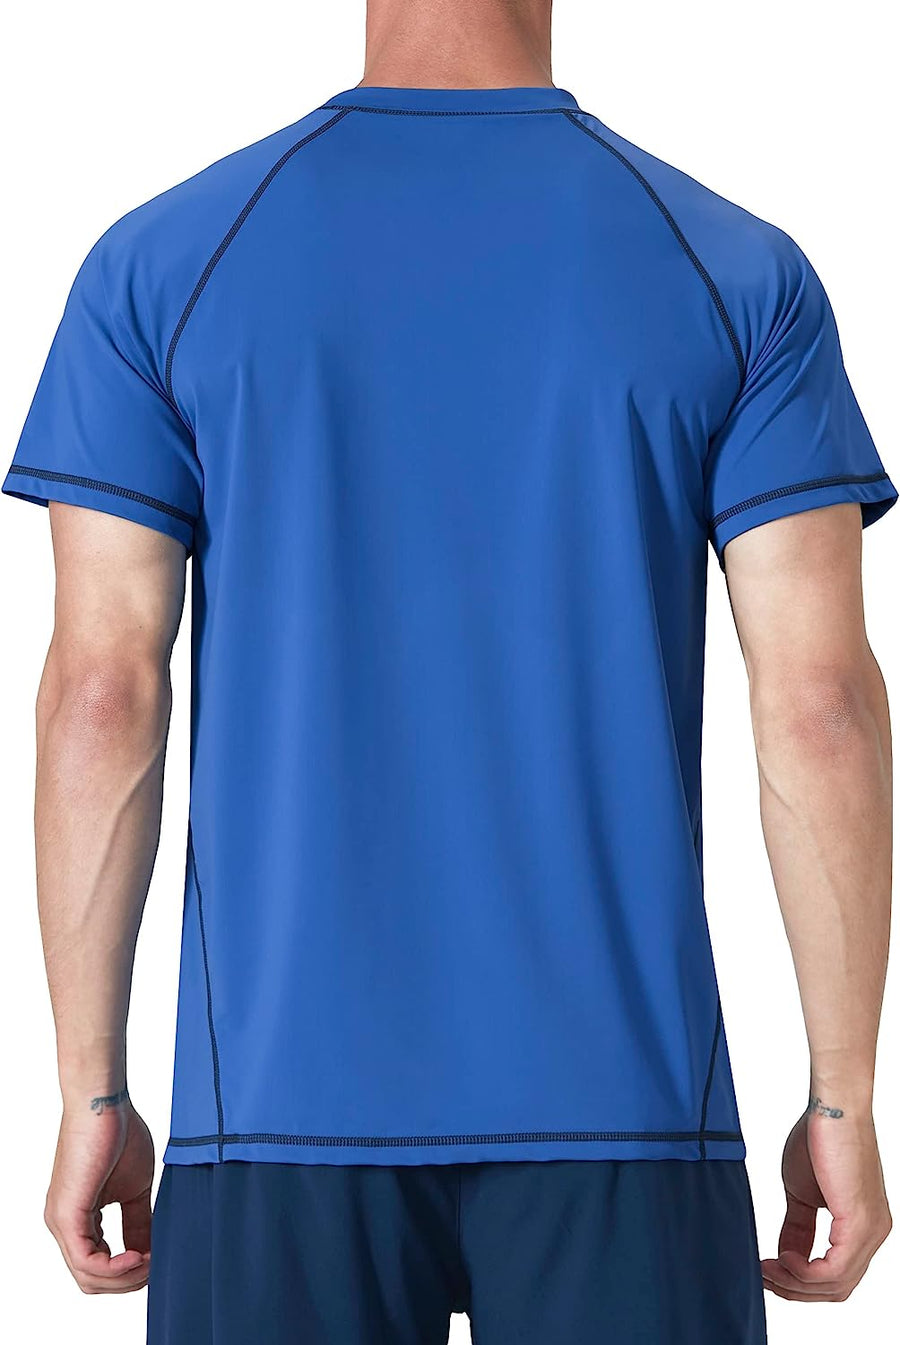 UPF 50+ UV Sun Protection SPF T Shirts